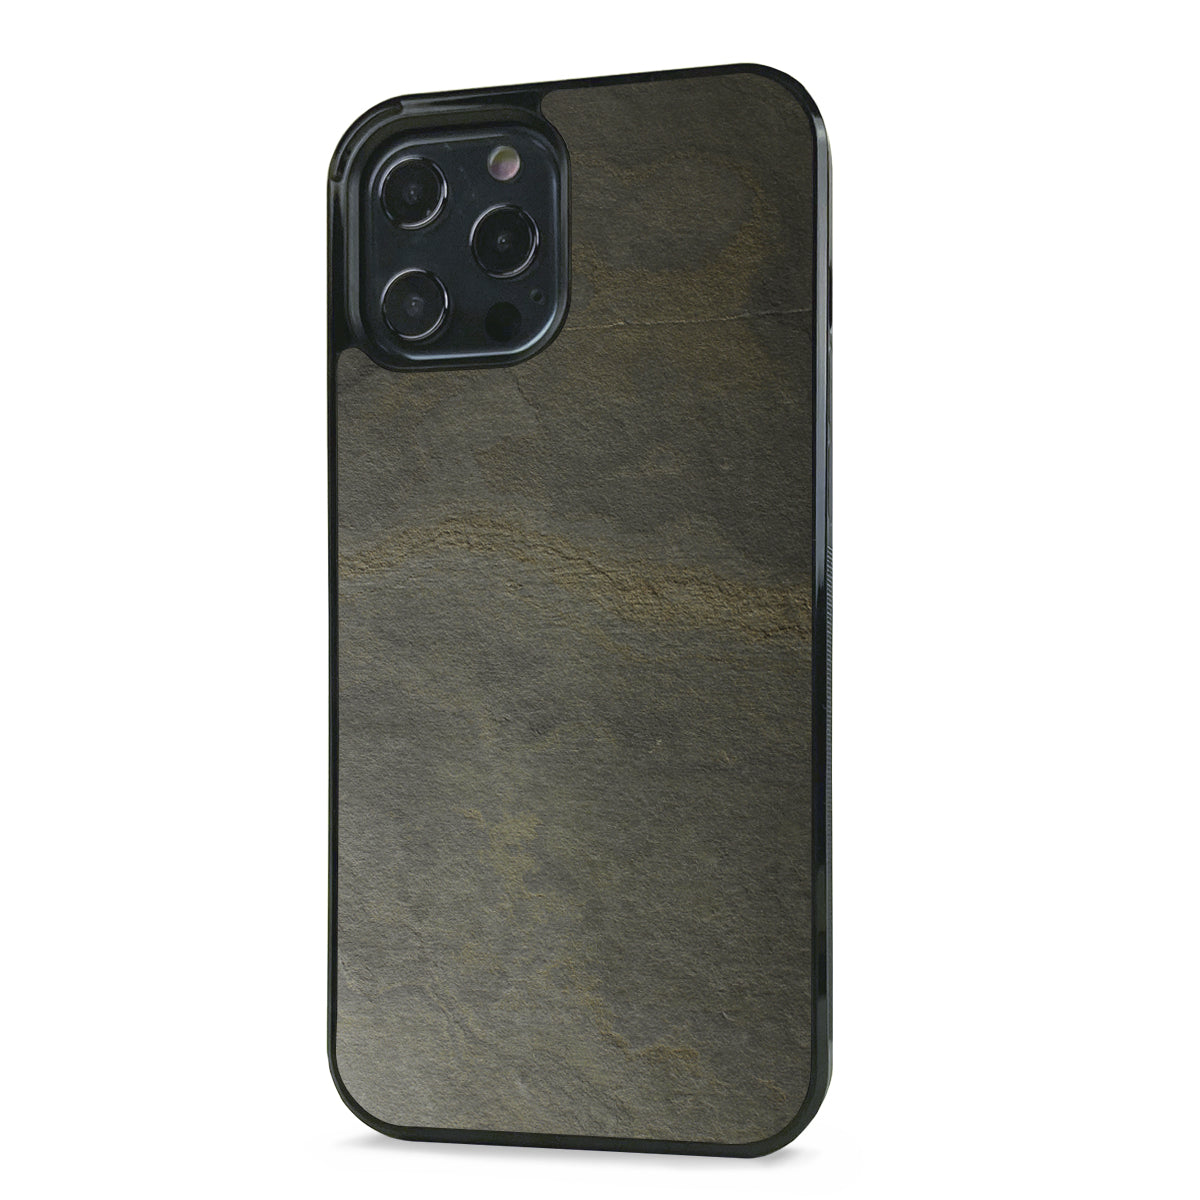 Aztec Gold Stone Iphone 12 Pro Max Explorer Case Stone Cases Cover Up